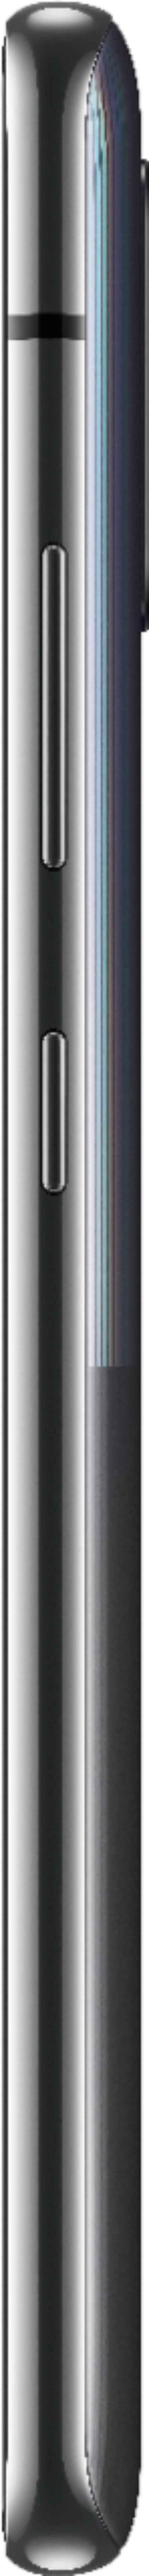 Samsung - Galaxy A51 5G 128GB - Prism Cube Black (AT&T)